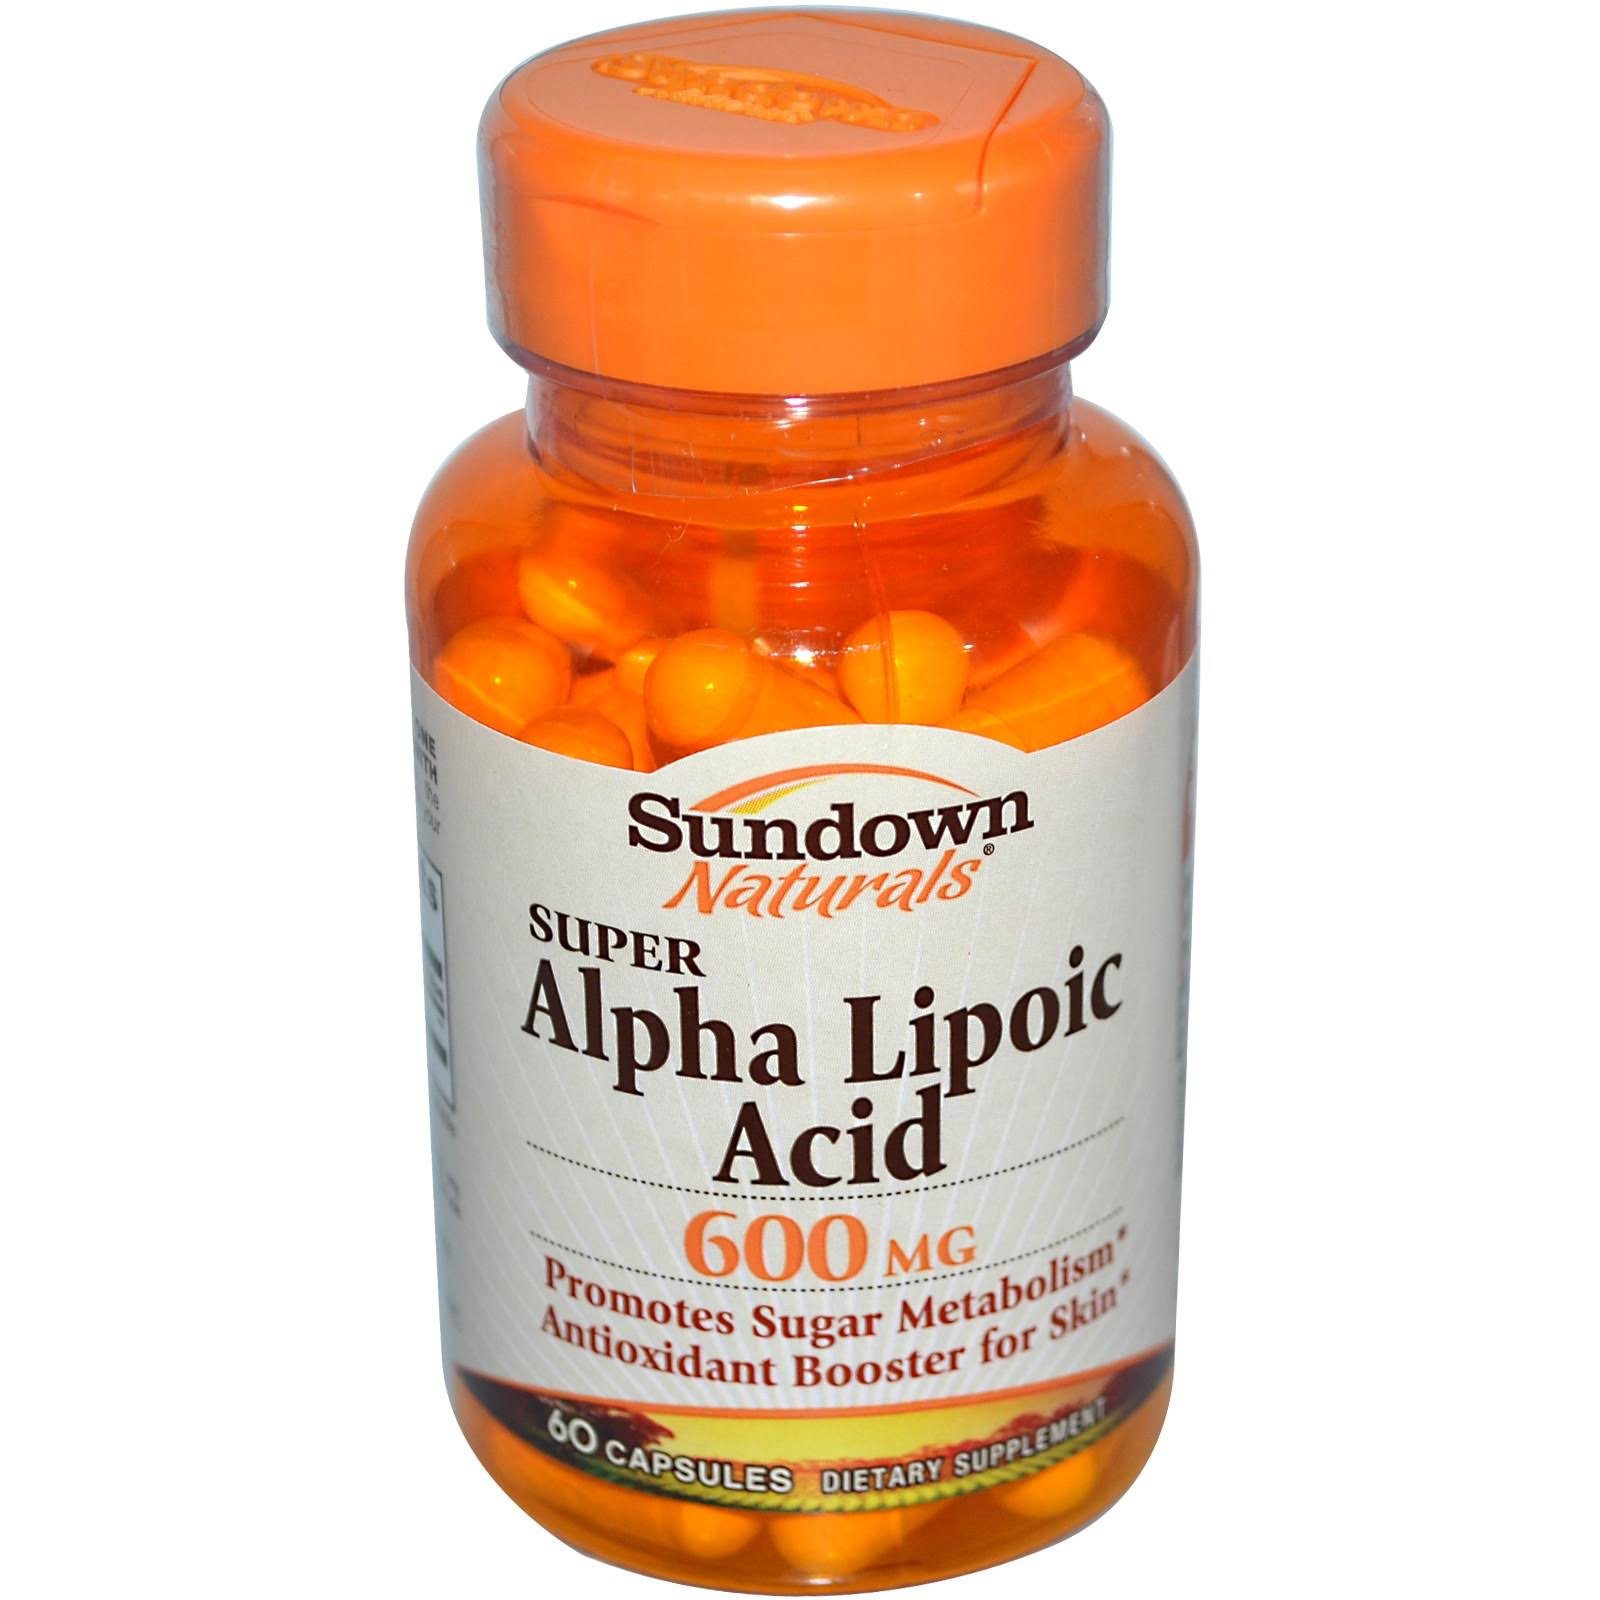 Sundown Naturals Super Alpha Lipoic Acid - 600mg, 60 Capsules